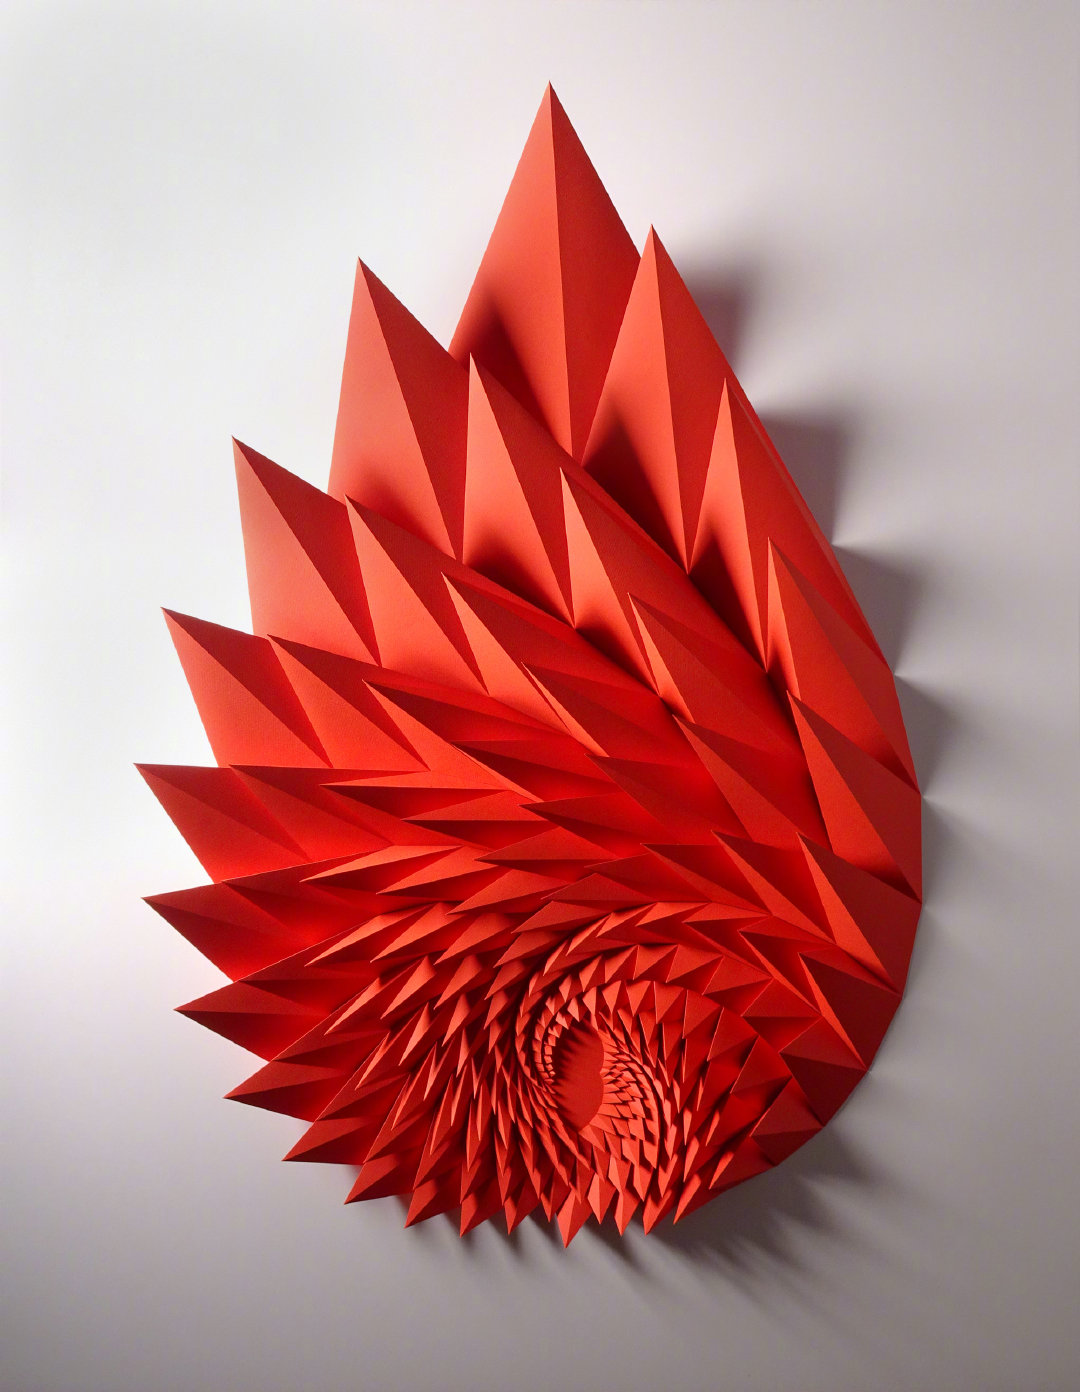 纸塑工程师 matthew shlian 的折纸艺术 | www.mattshlian.com